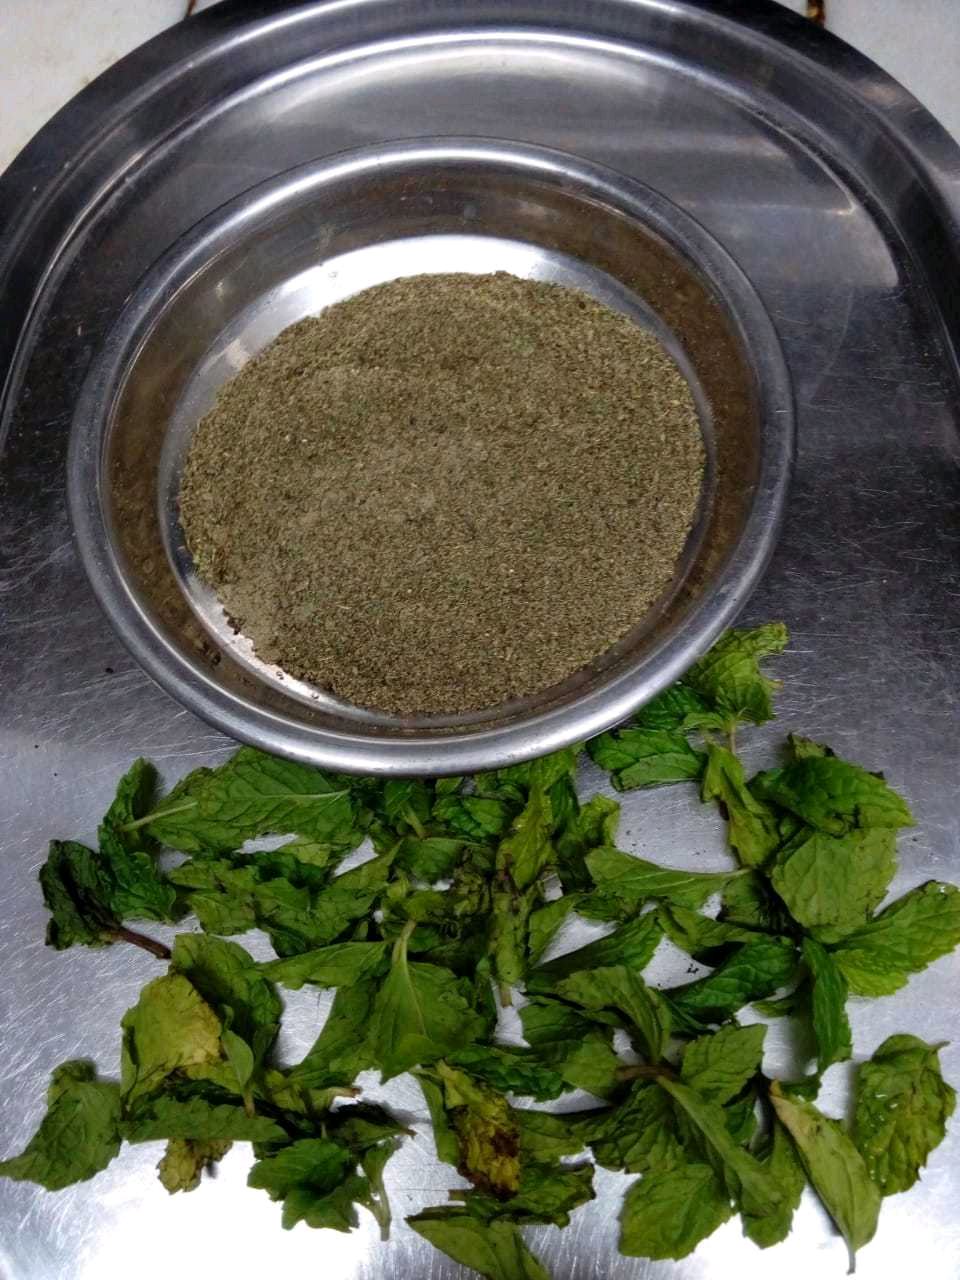 chach masala powder